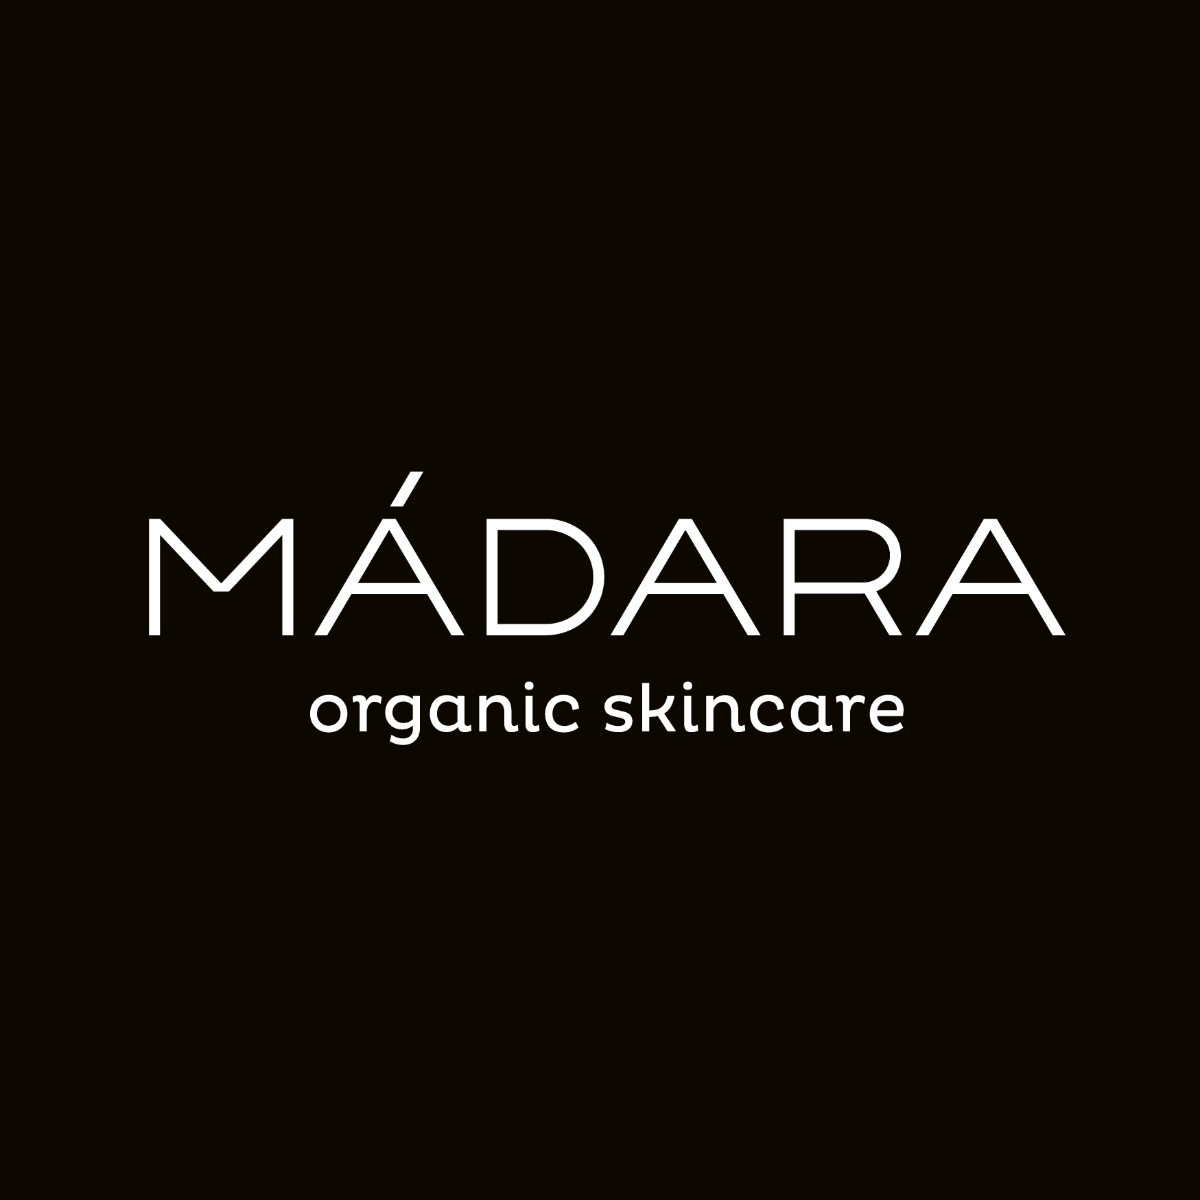 Personal Care Products Company Logo - MÁDARA Organic Skincare